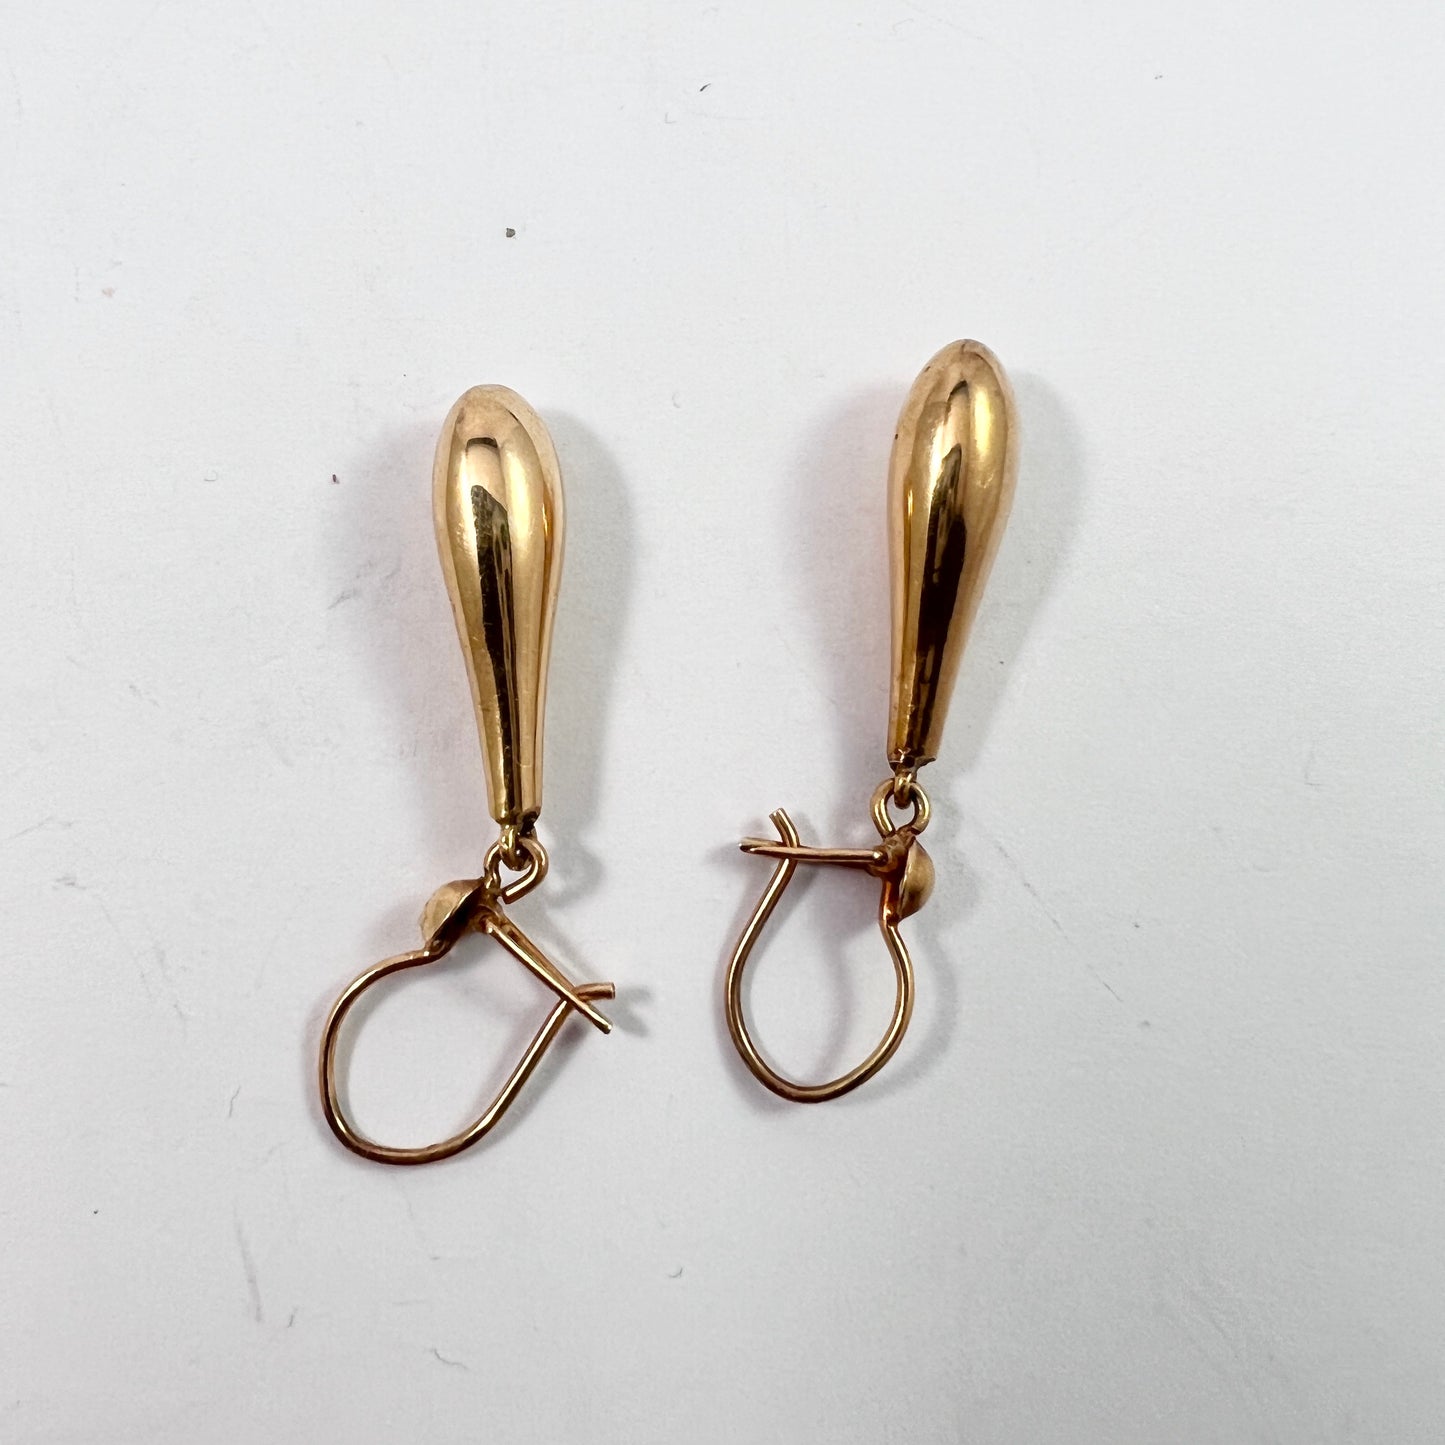 Sweden c 1960-70s. Vintage 18k Gold Large Drop Dangle Earrings.